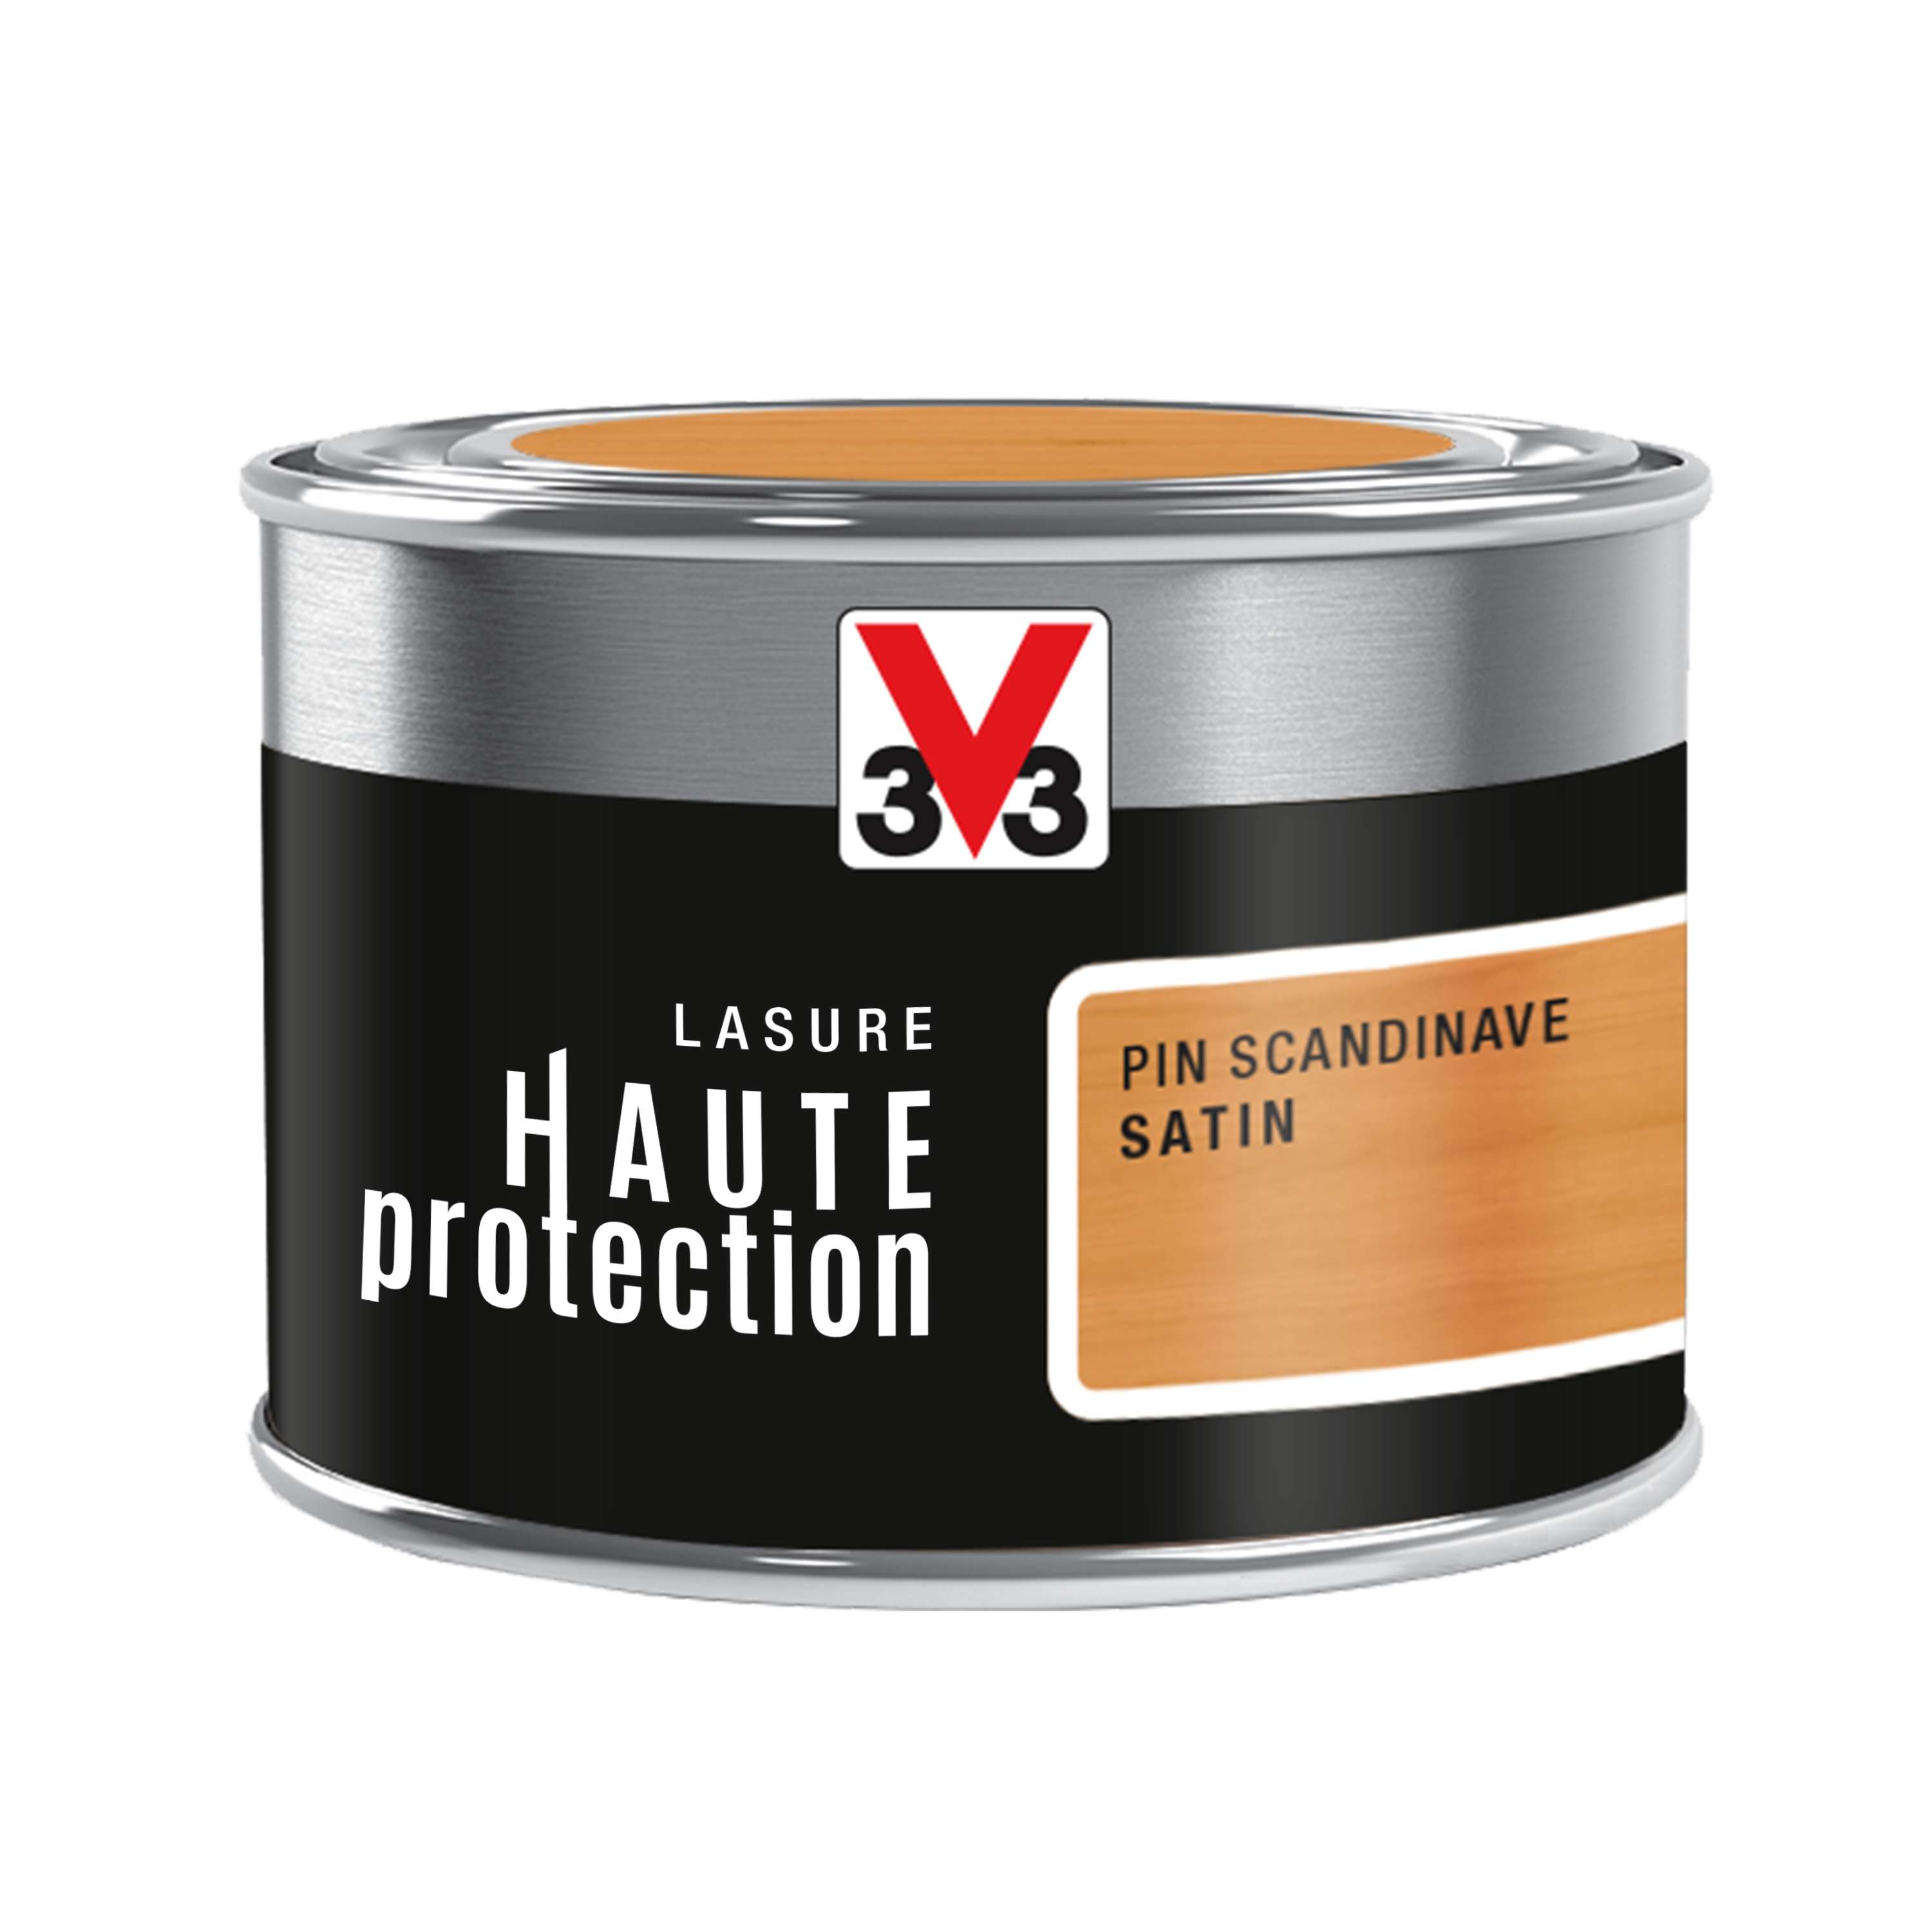 Lasure Haute Protection V33 PIN SCANDIN SATIN 125ml